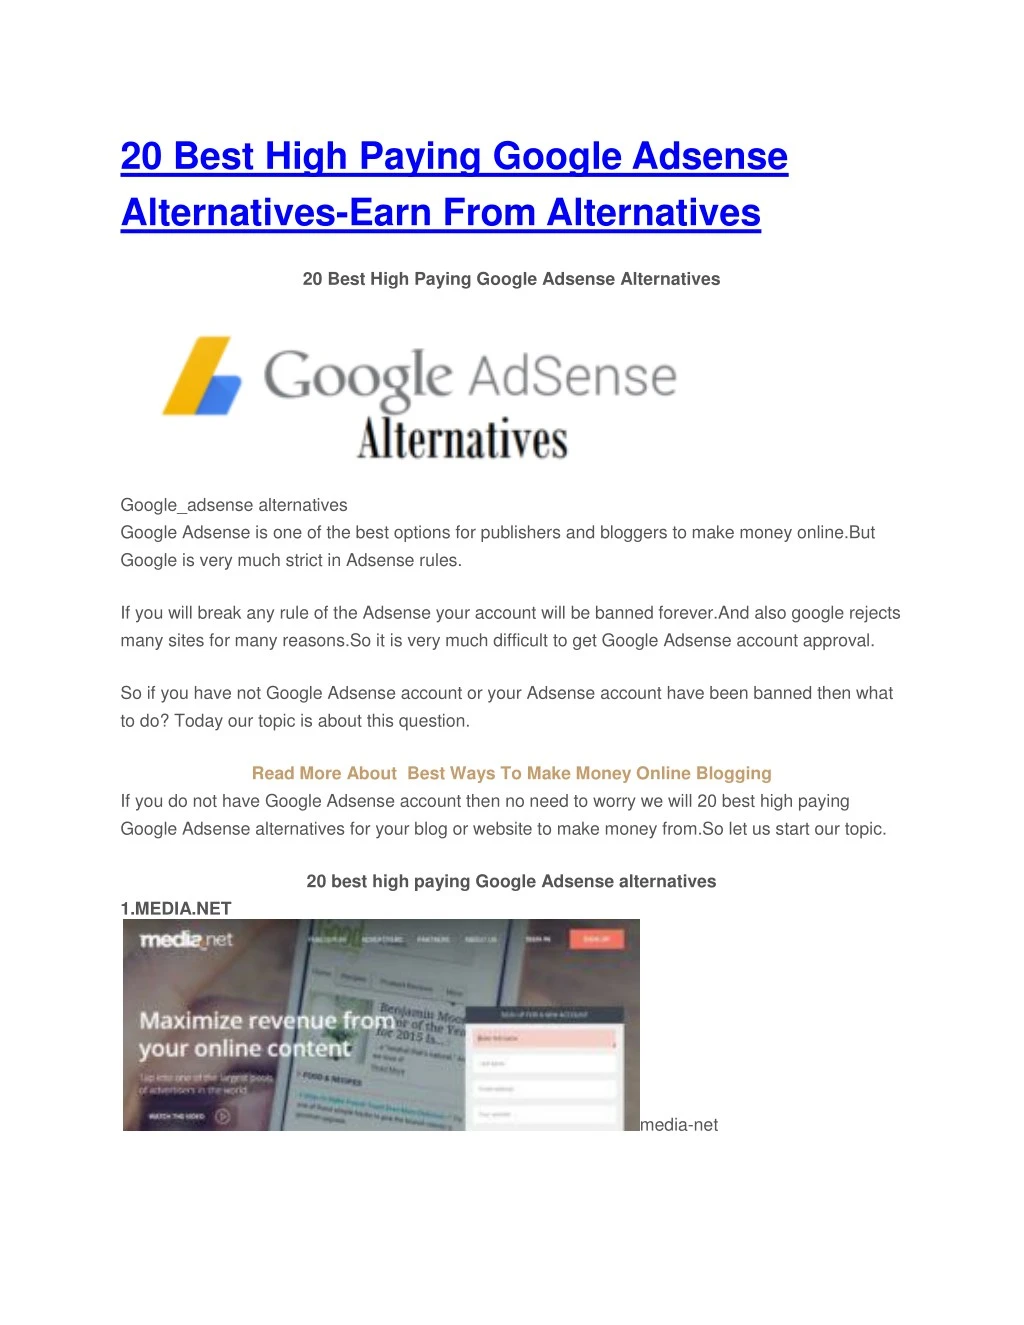 20 best high paying google adsense alternatives